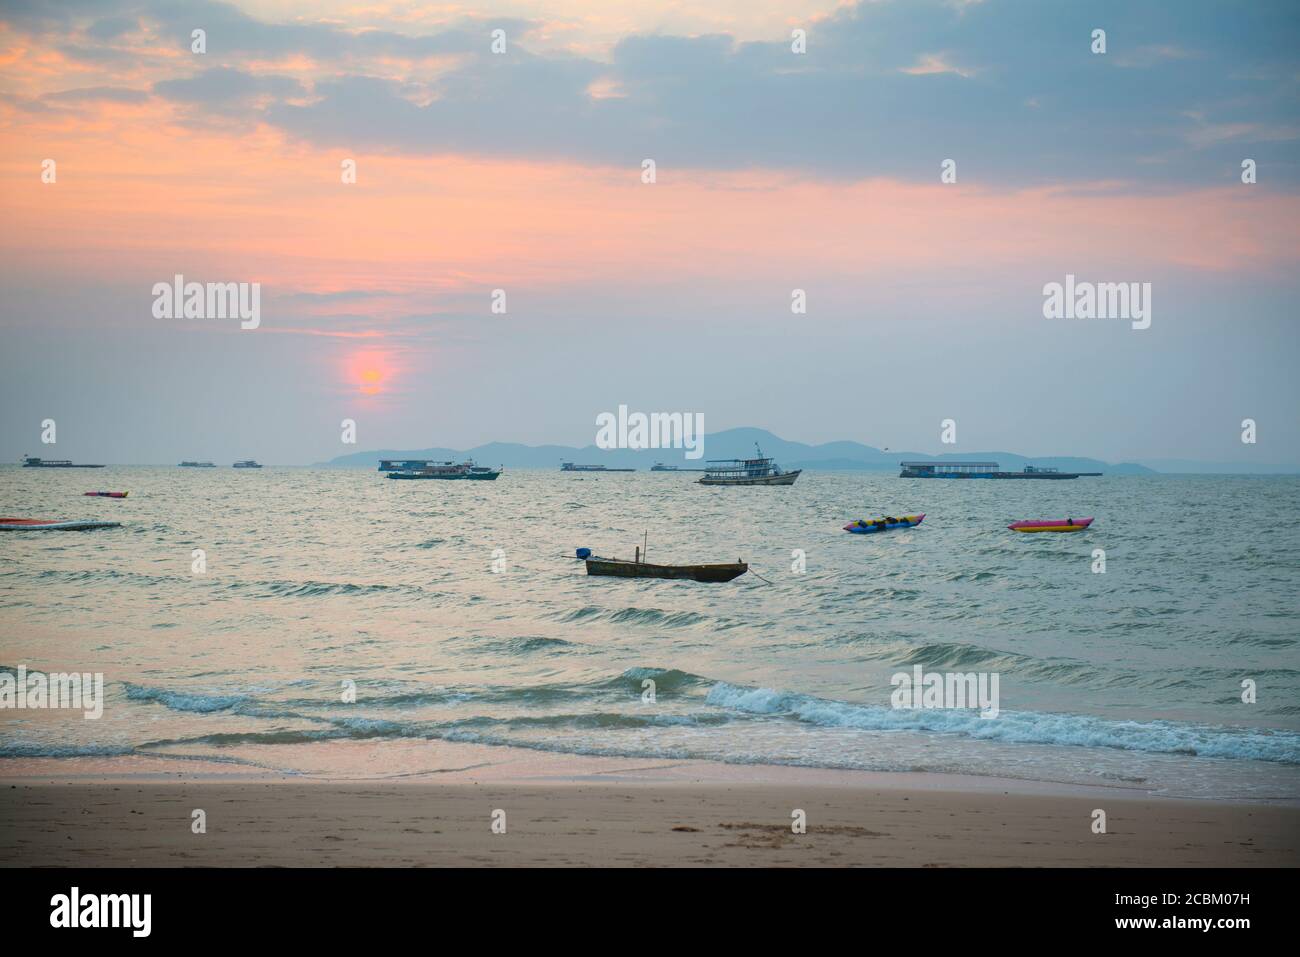 Boats on sea, Koh Samet, Thailand Stock Photo